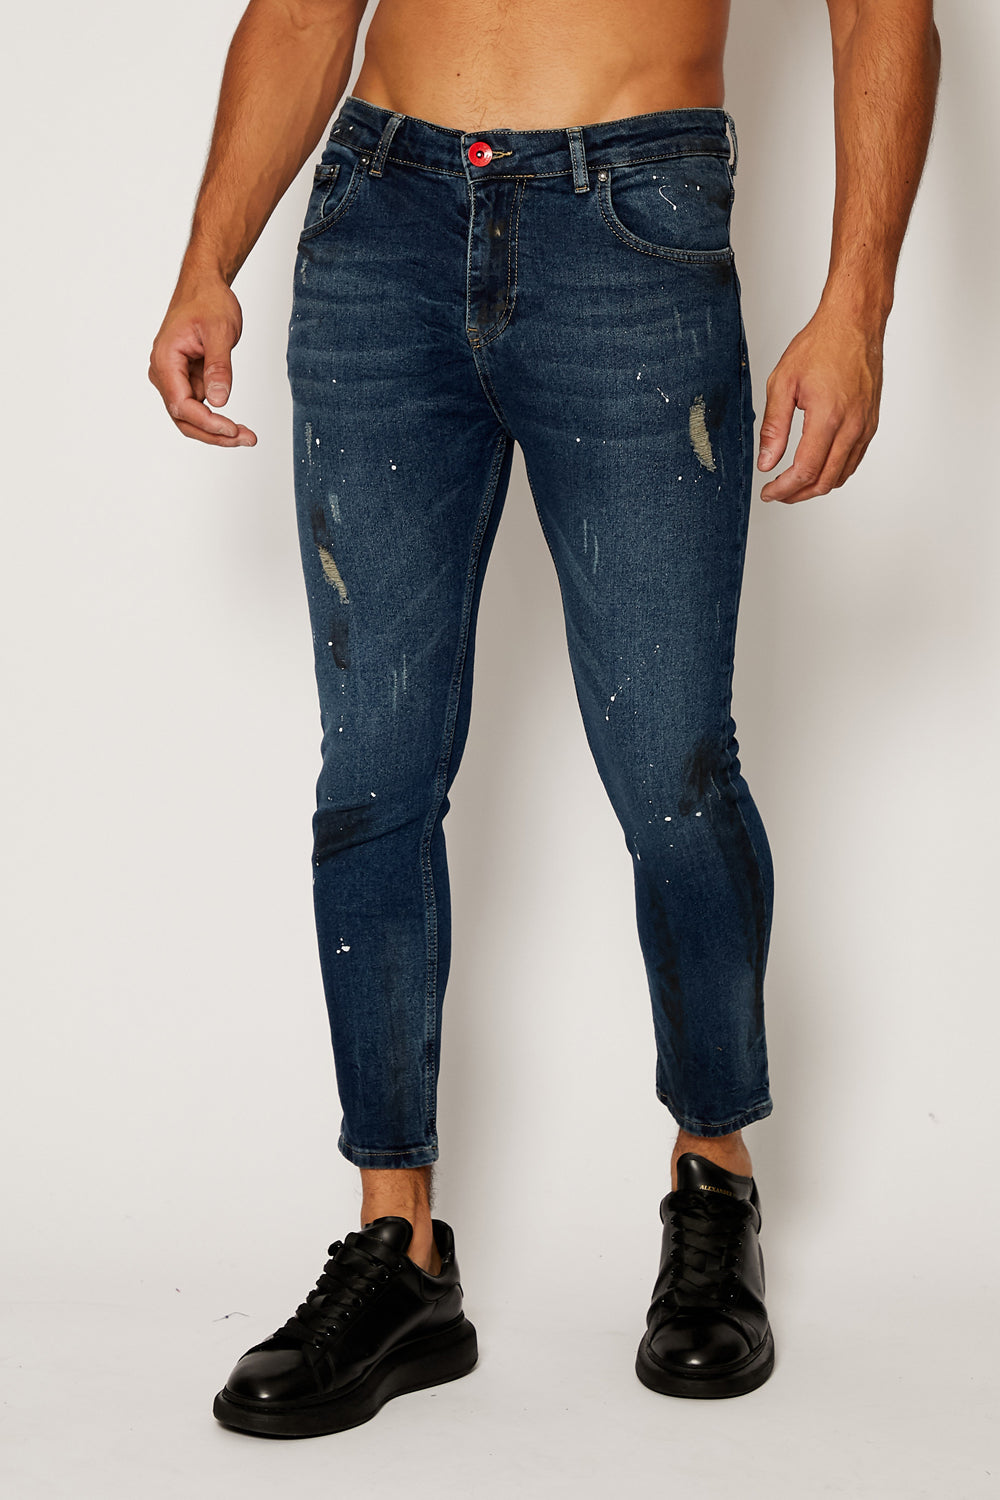 Camedon Road Skinny Jeans - Dark Blue